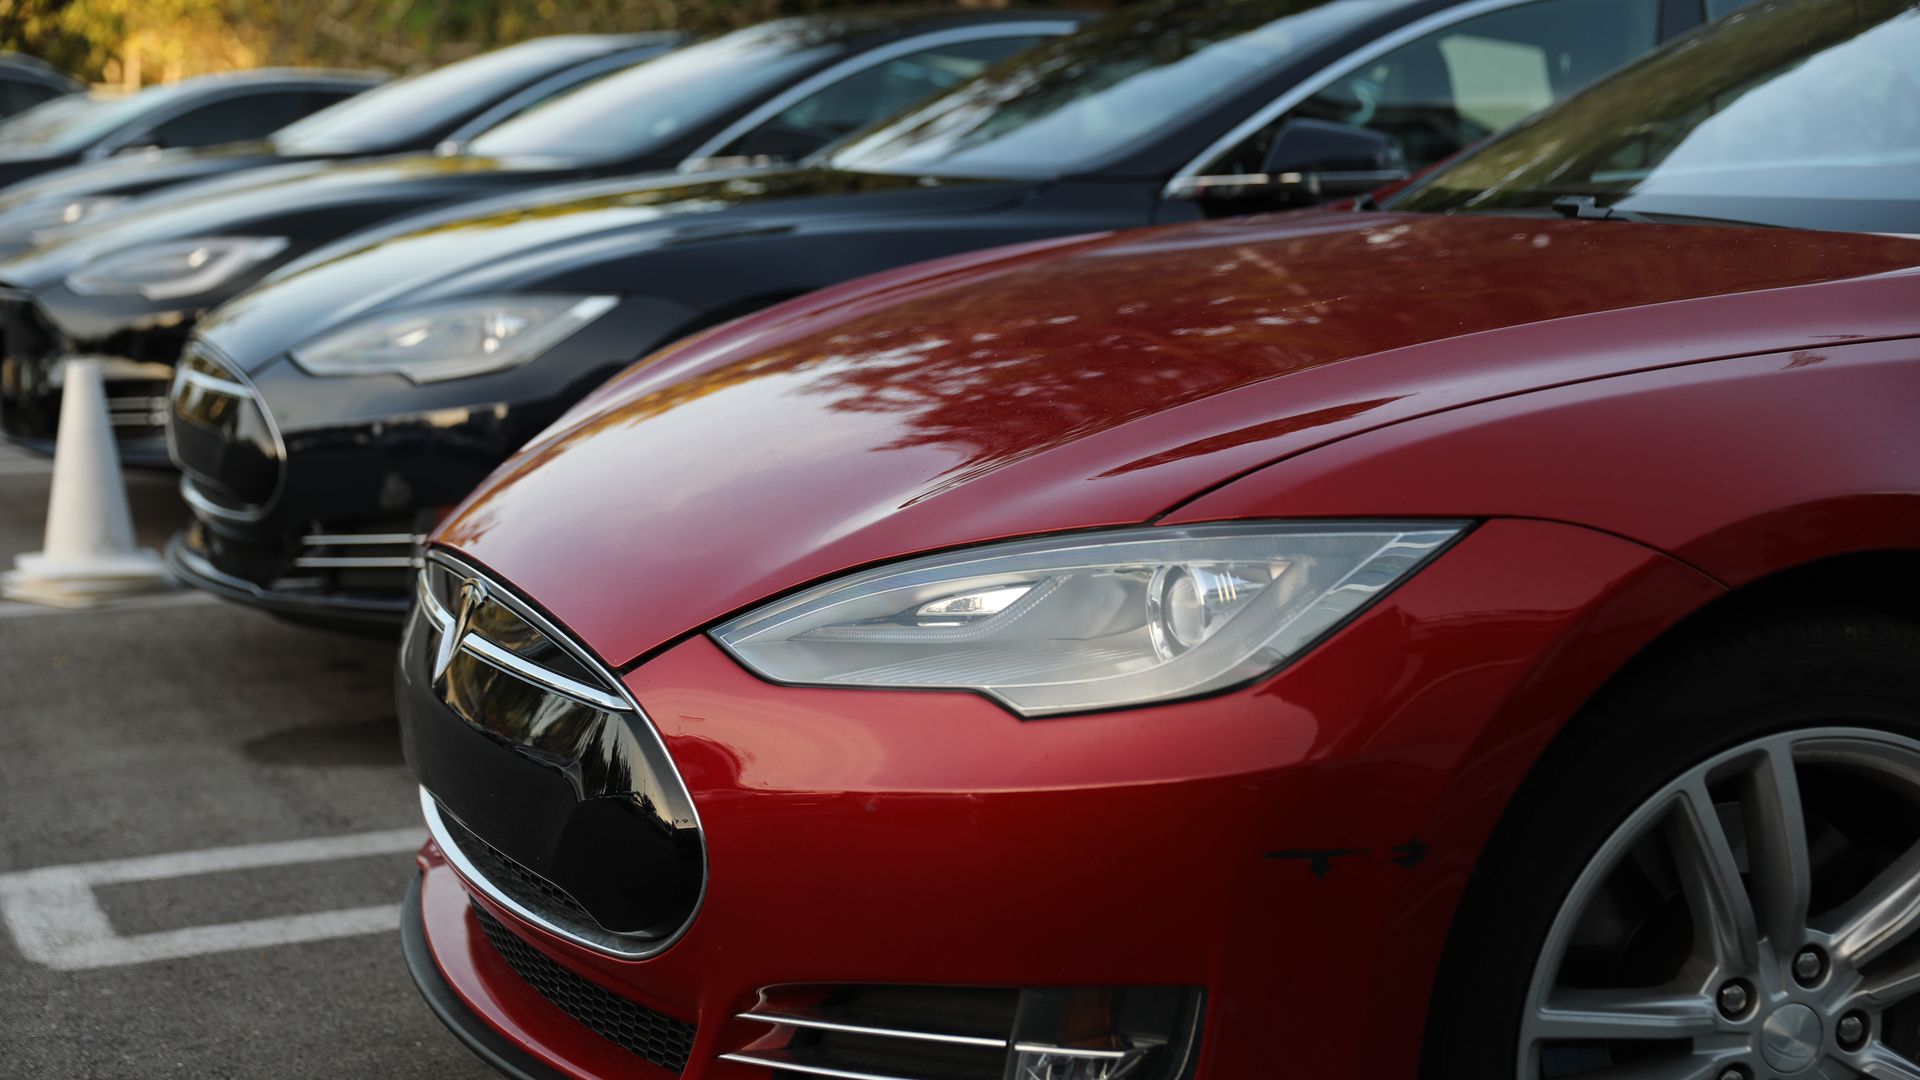 Photograph of a row of new Teslas at a dealership